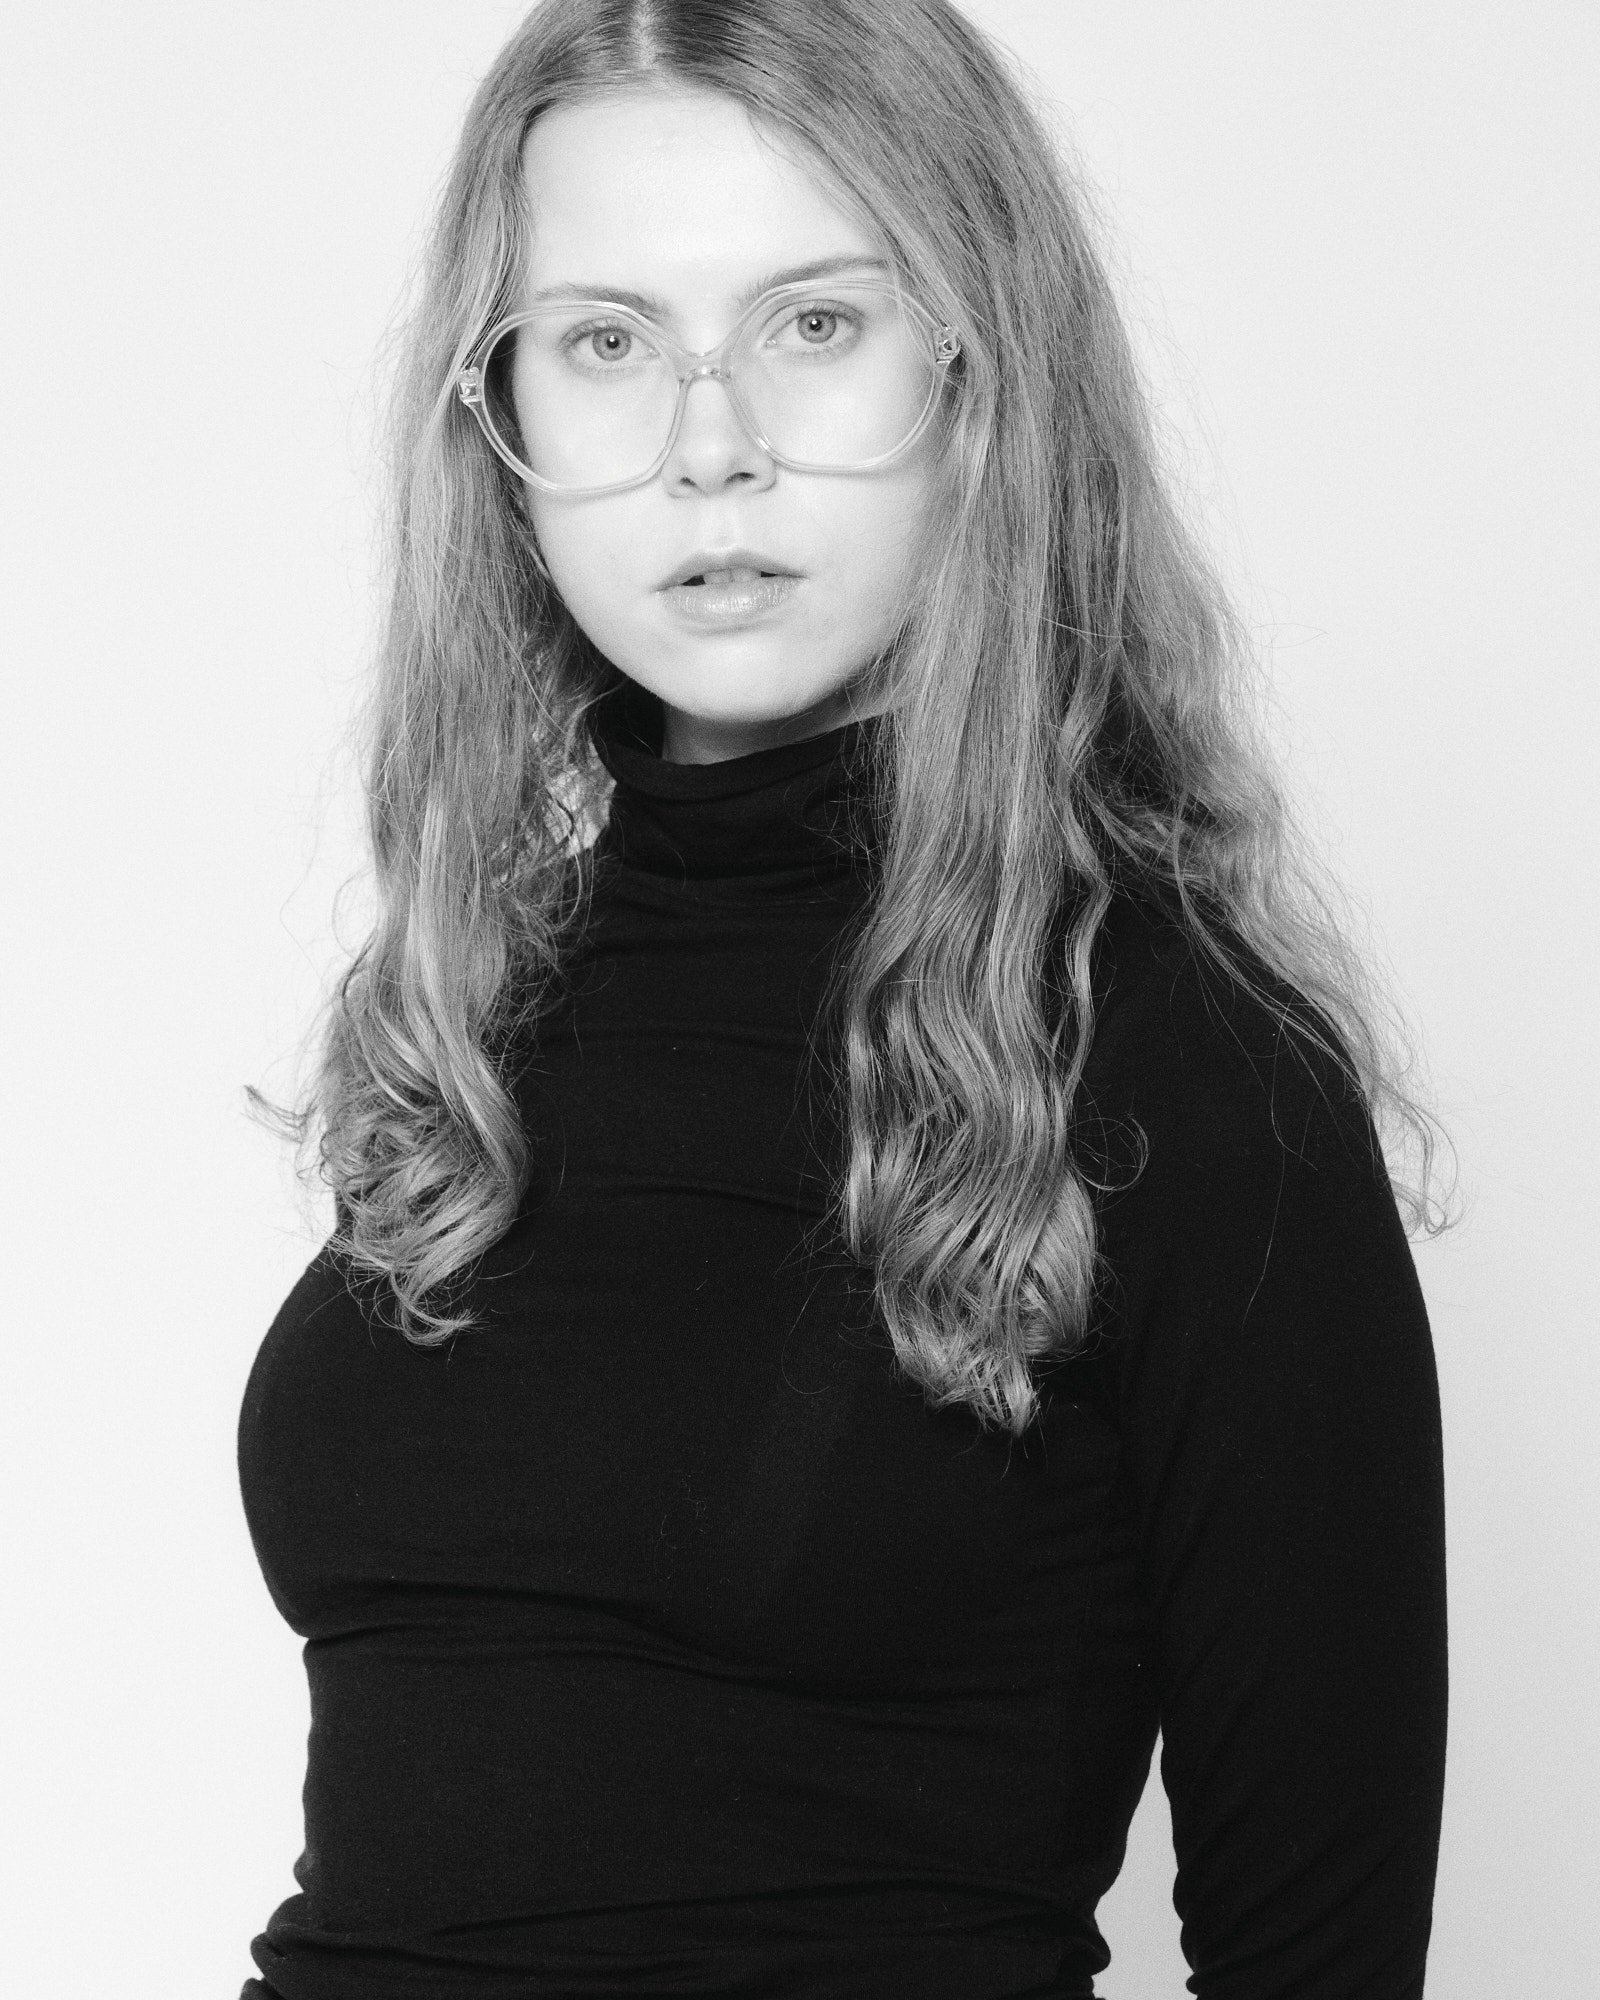 Ingrid Lovise photographed by Alexander Sylt